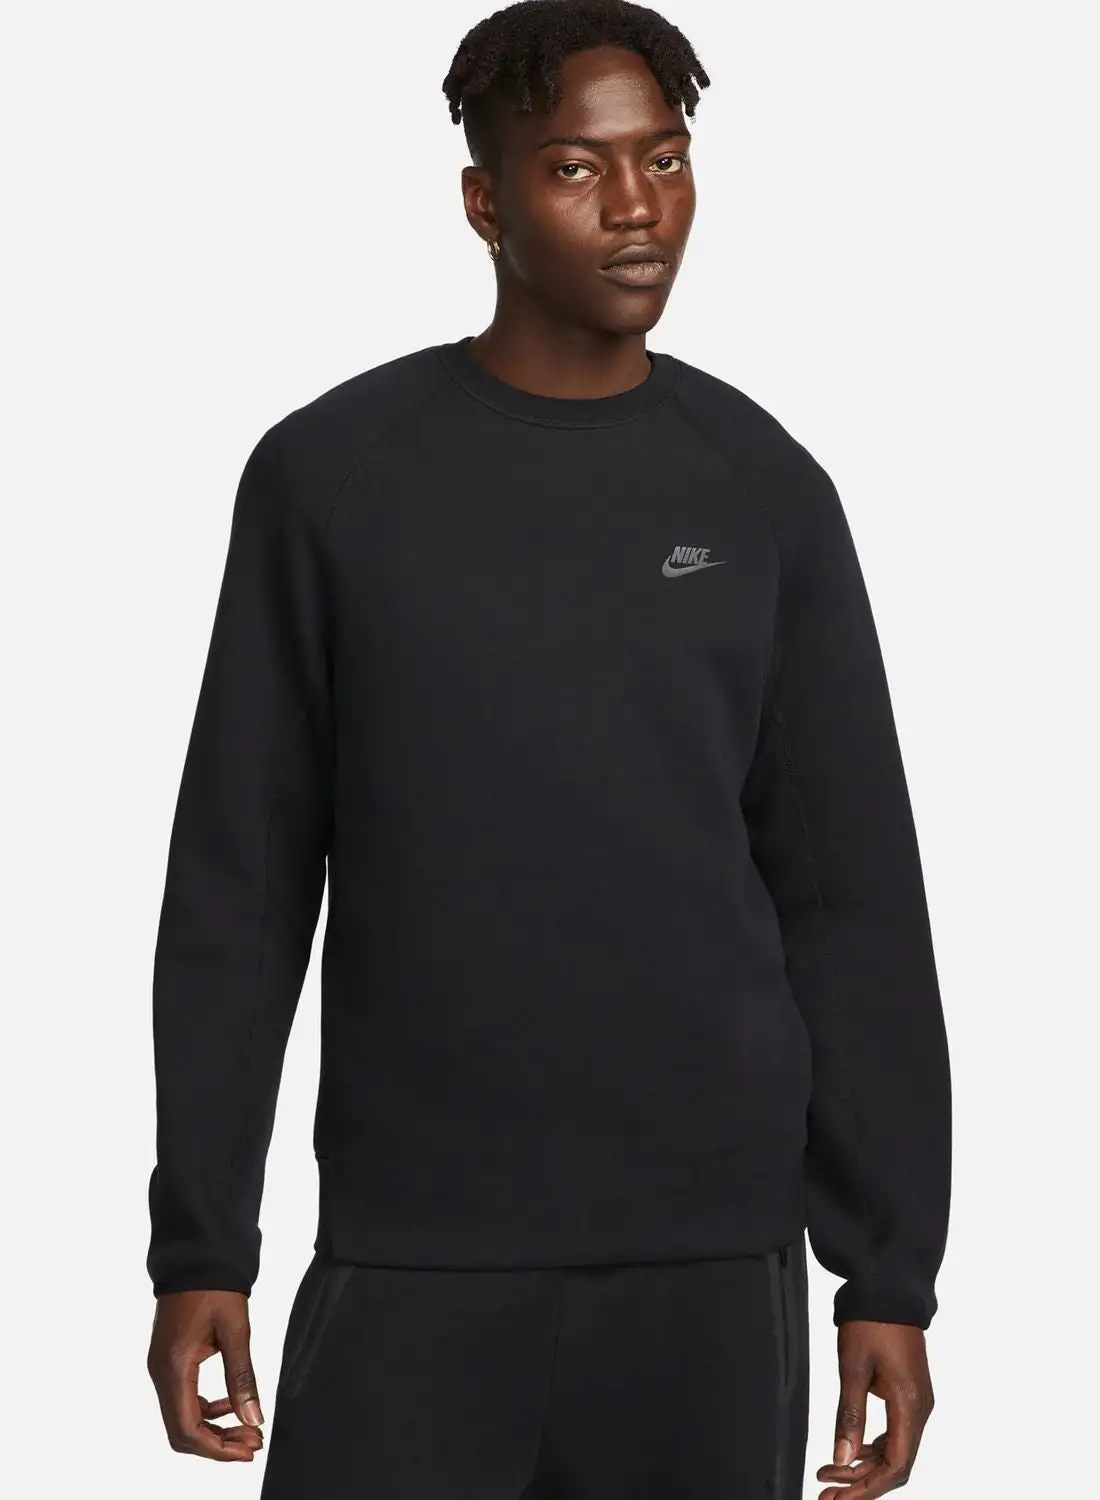 Nike Tch Fleece Sweatshirt